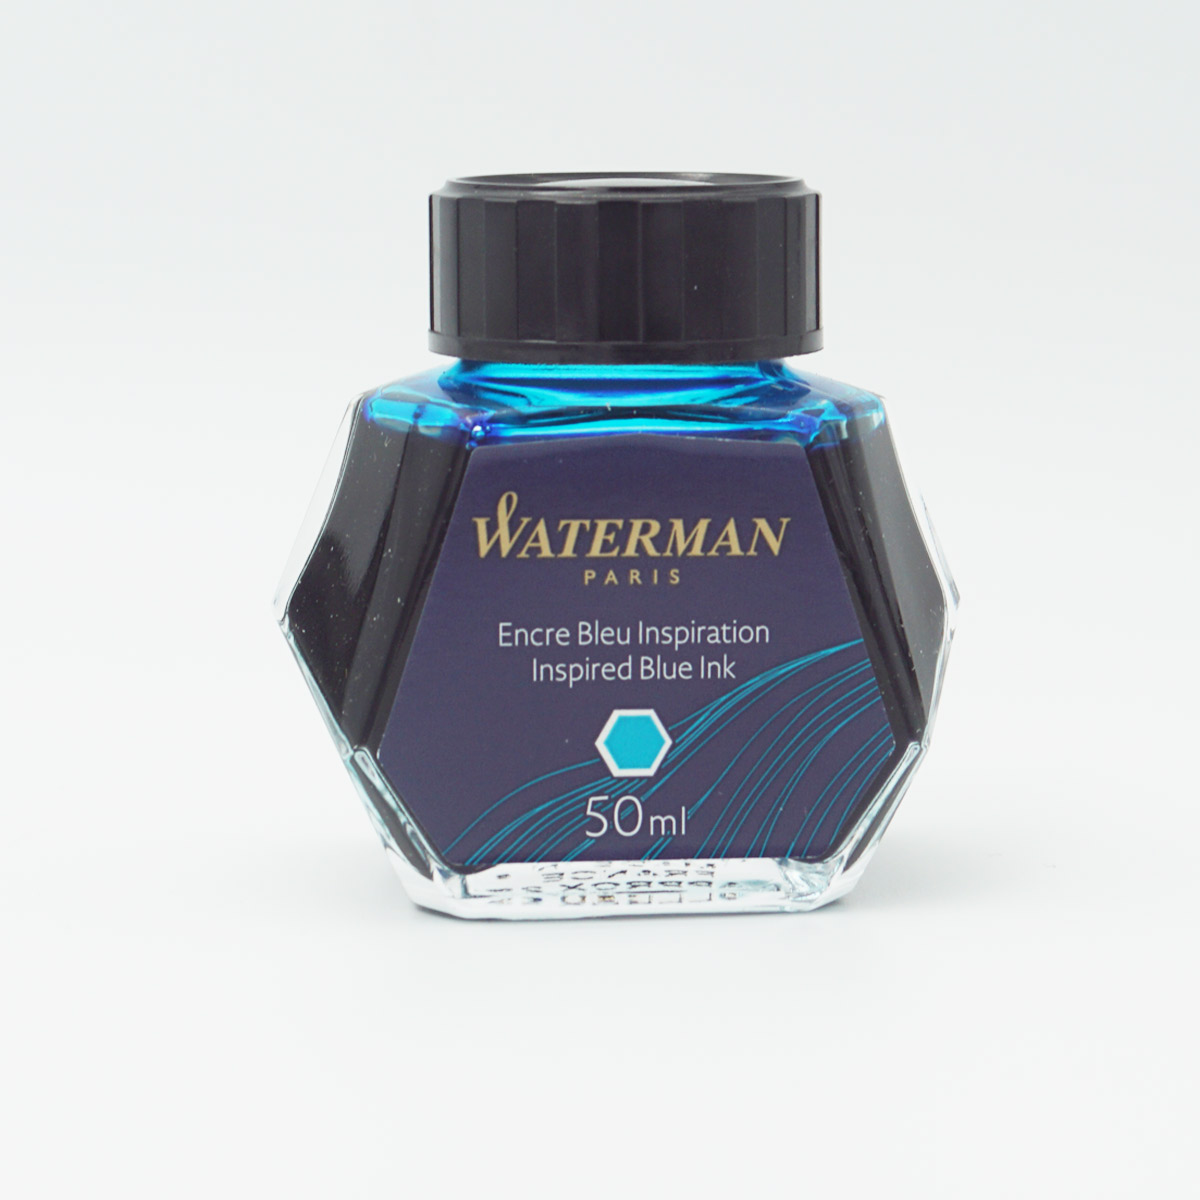 Waterman Encre Bleu Inspiration Inspired 50ml Blue Ink SKU 70619